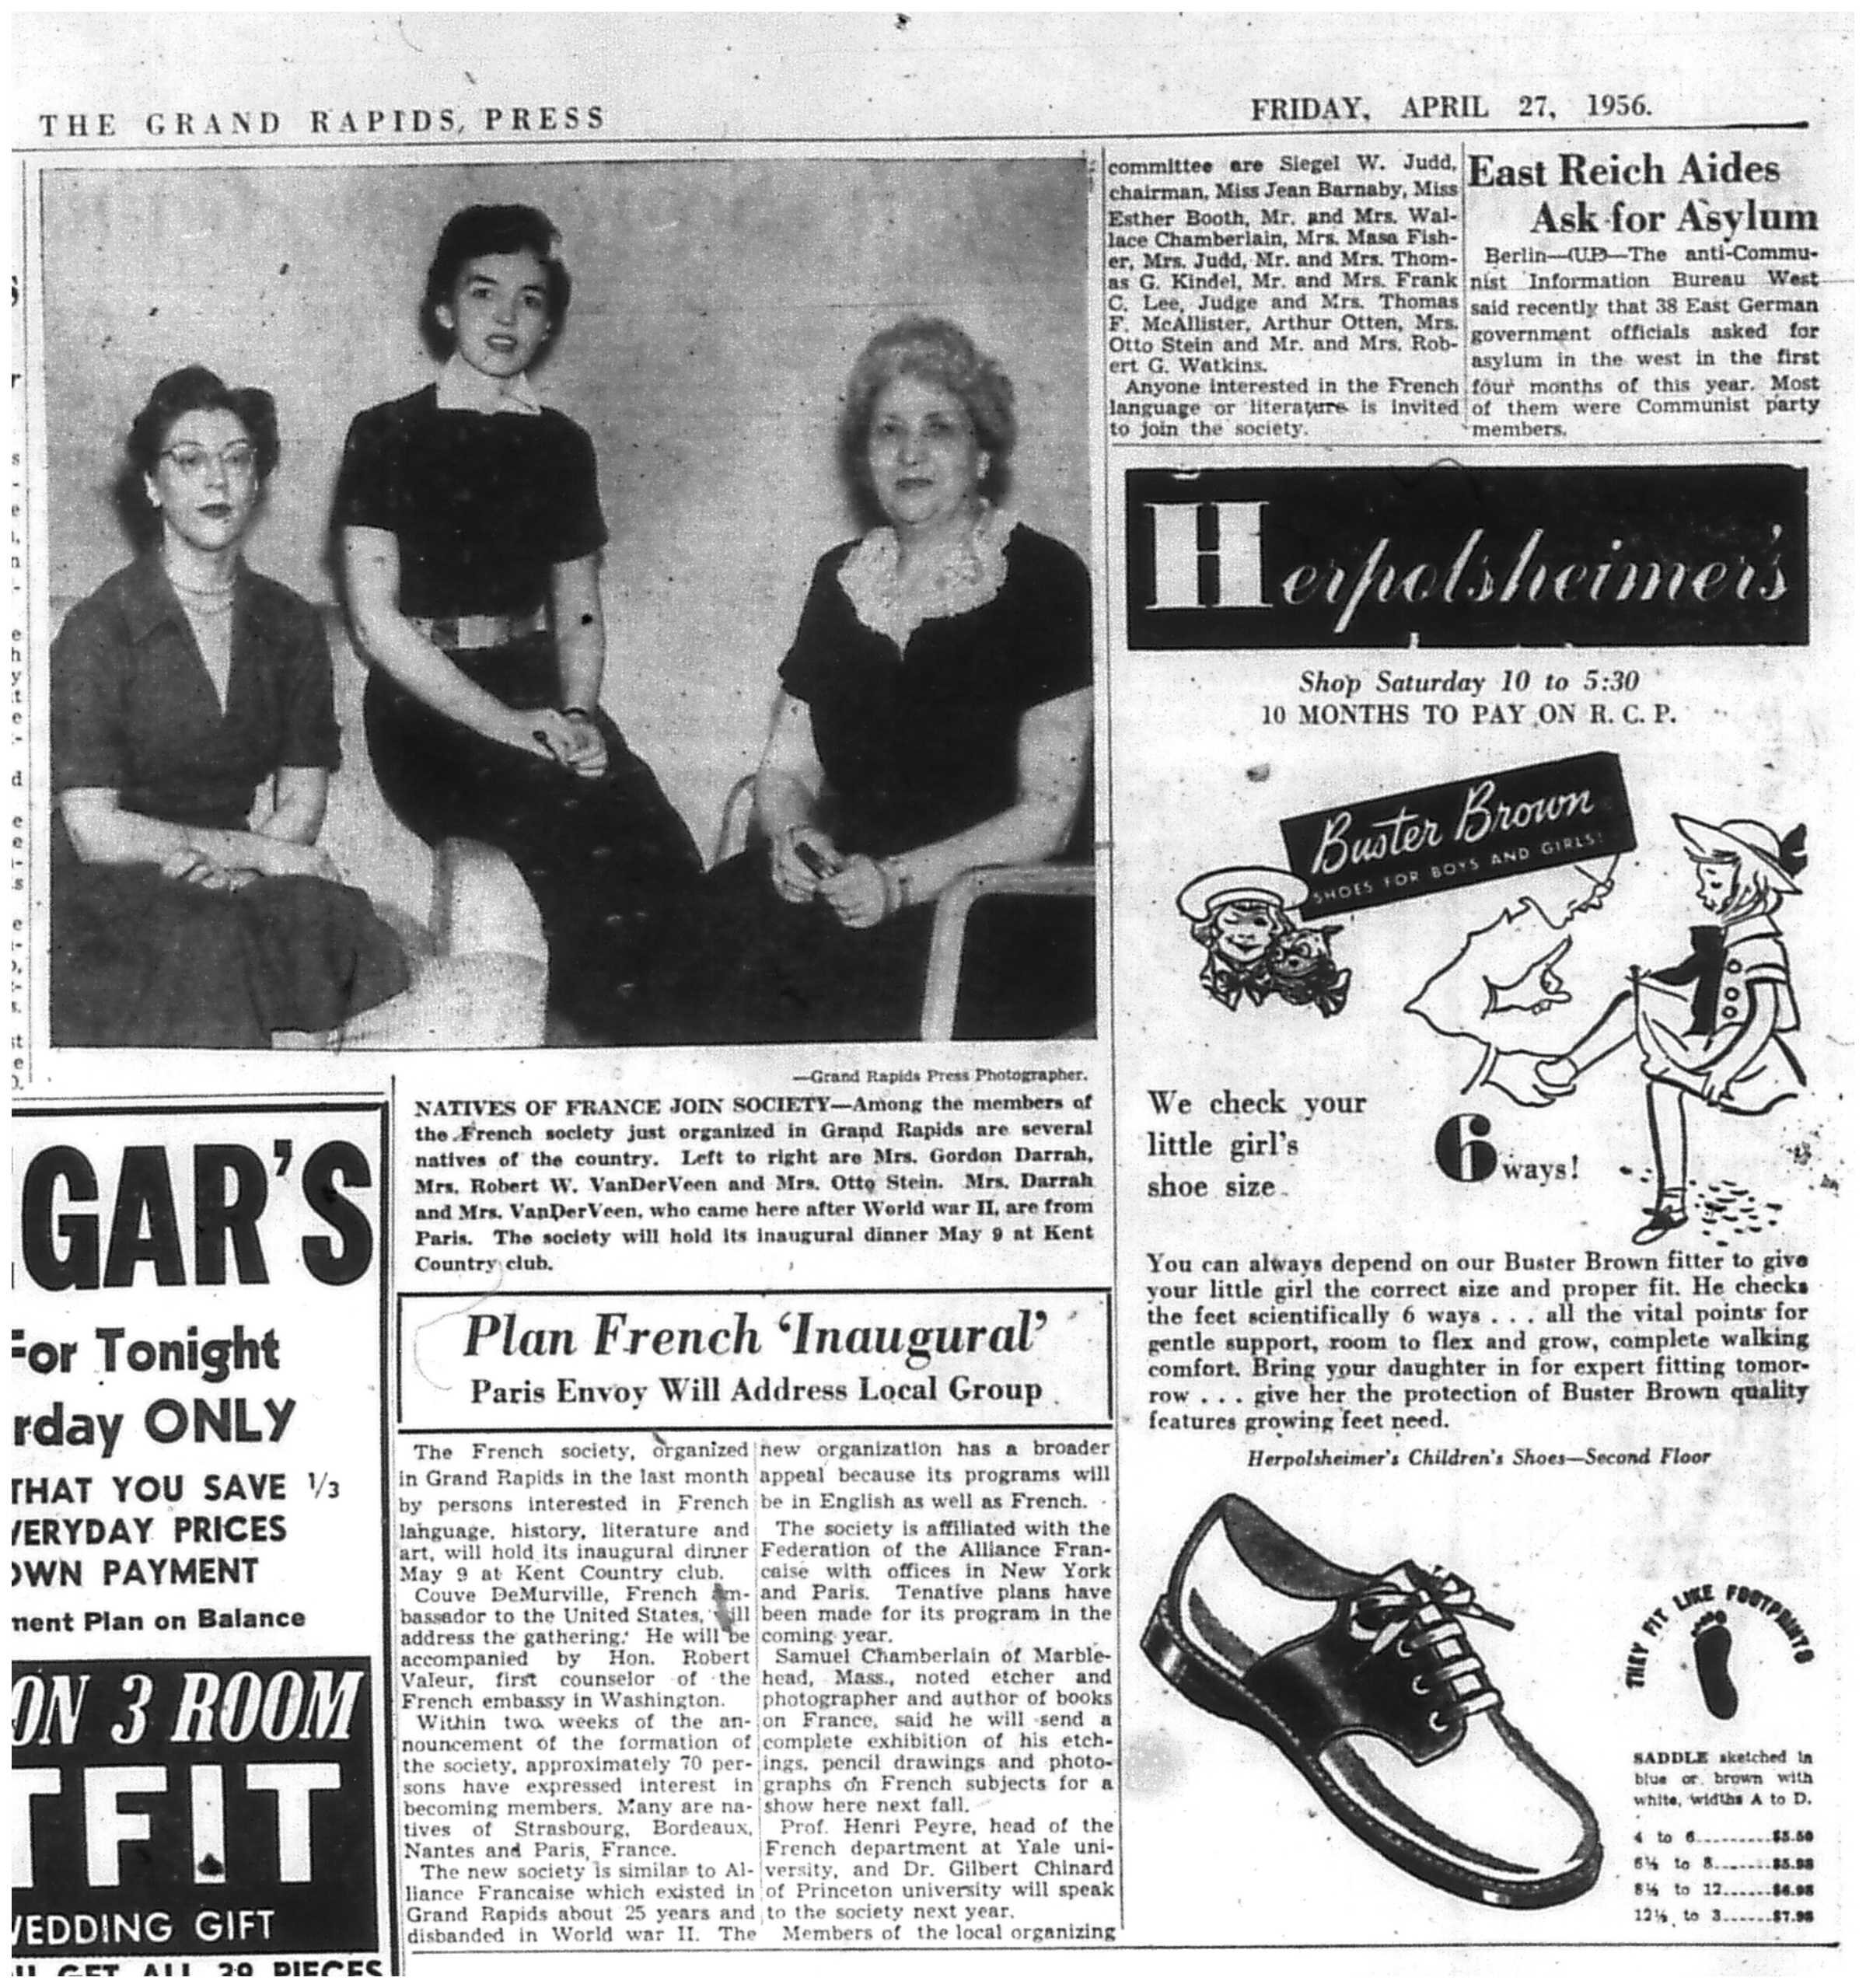 French Society 27 Apr 1956 pg. 24 Grand Rapids Press.jpg